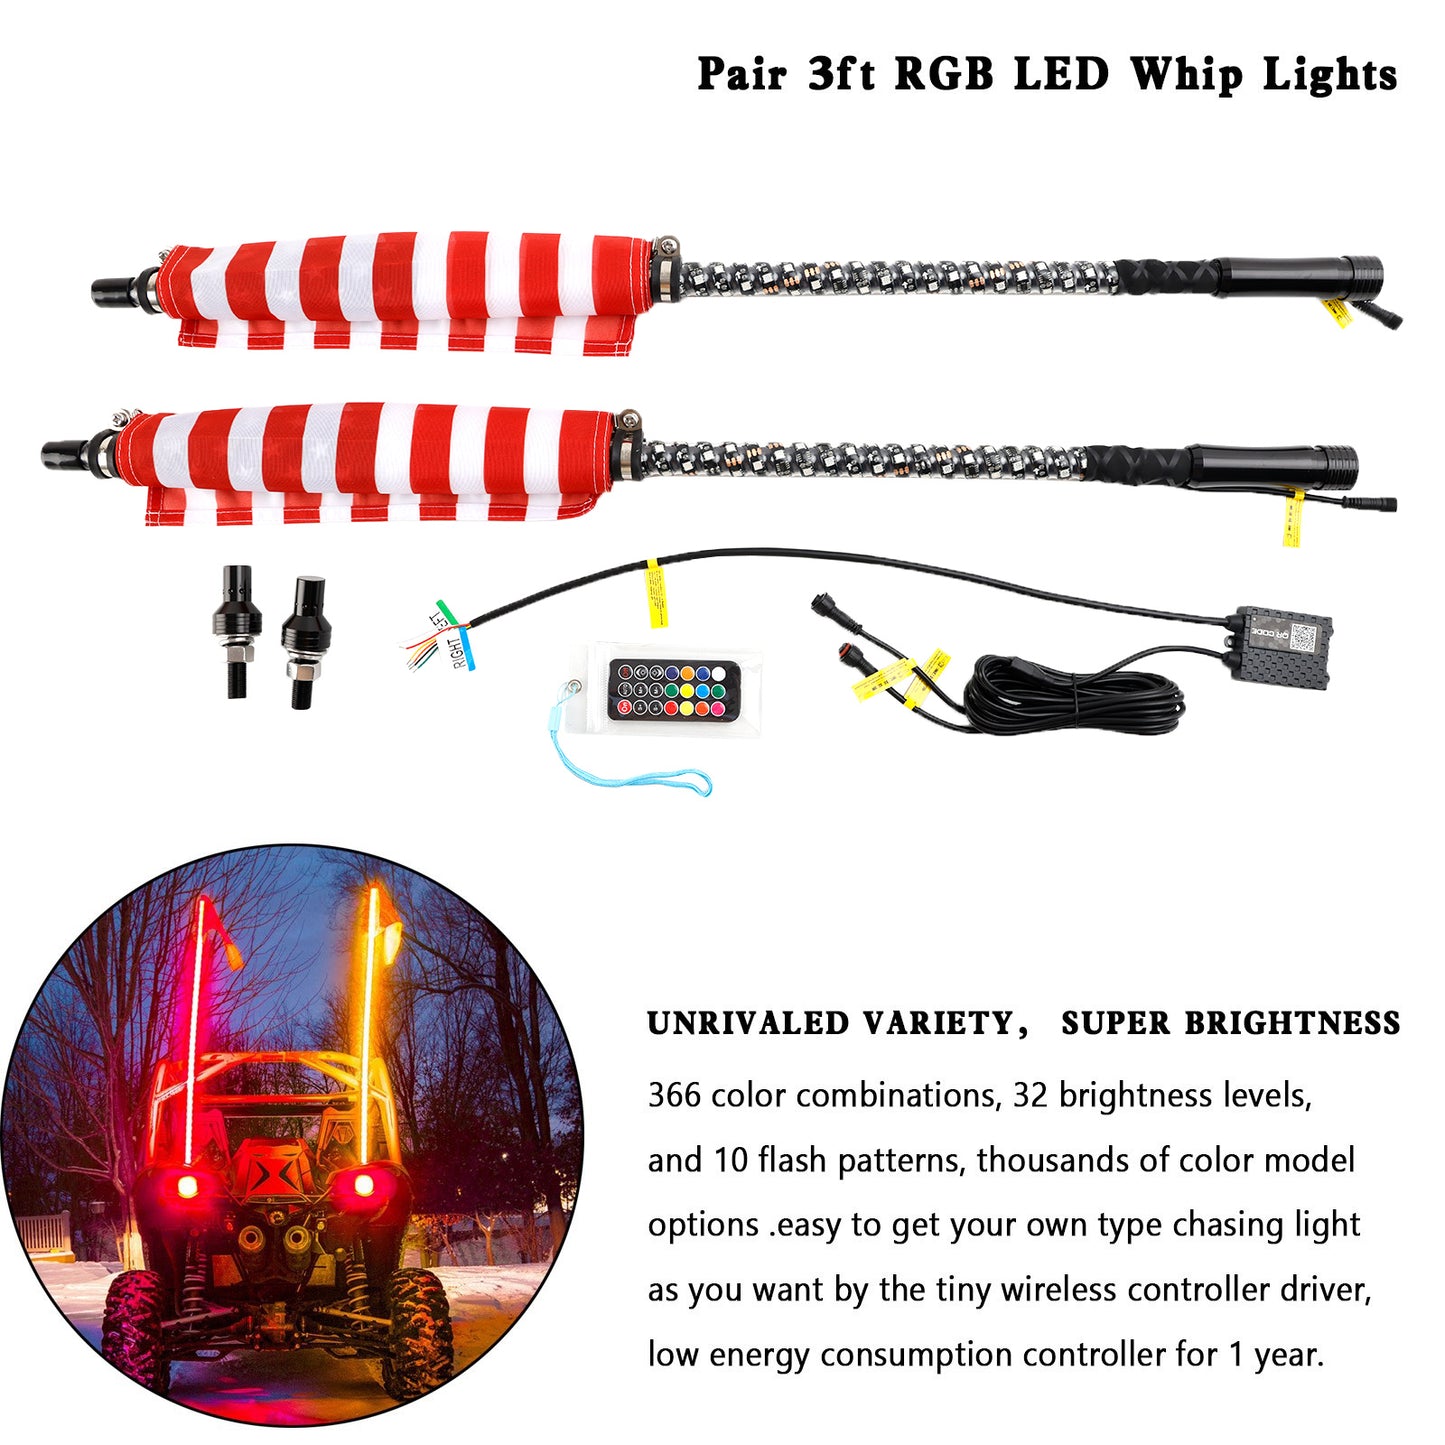 2X 3ft RGB LED Whip Lights Antenna W/ Flag Remote Control For Polaris RZR UTV ATV